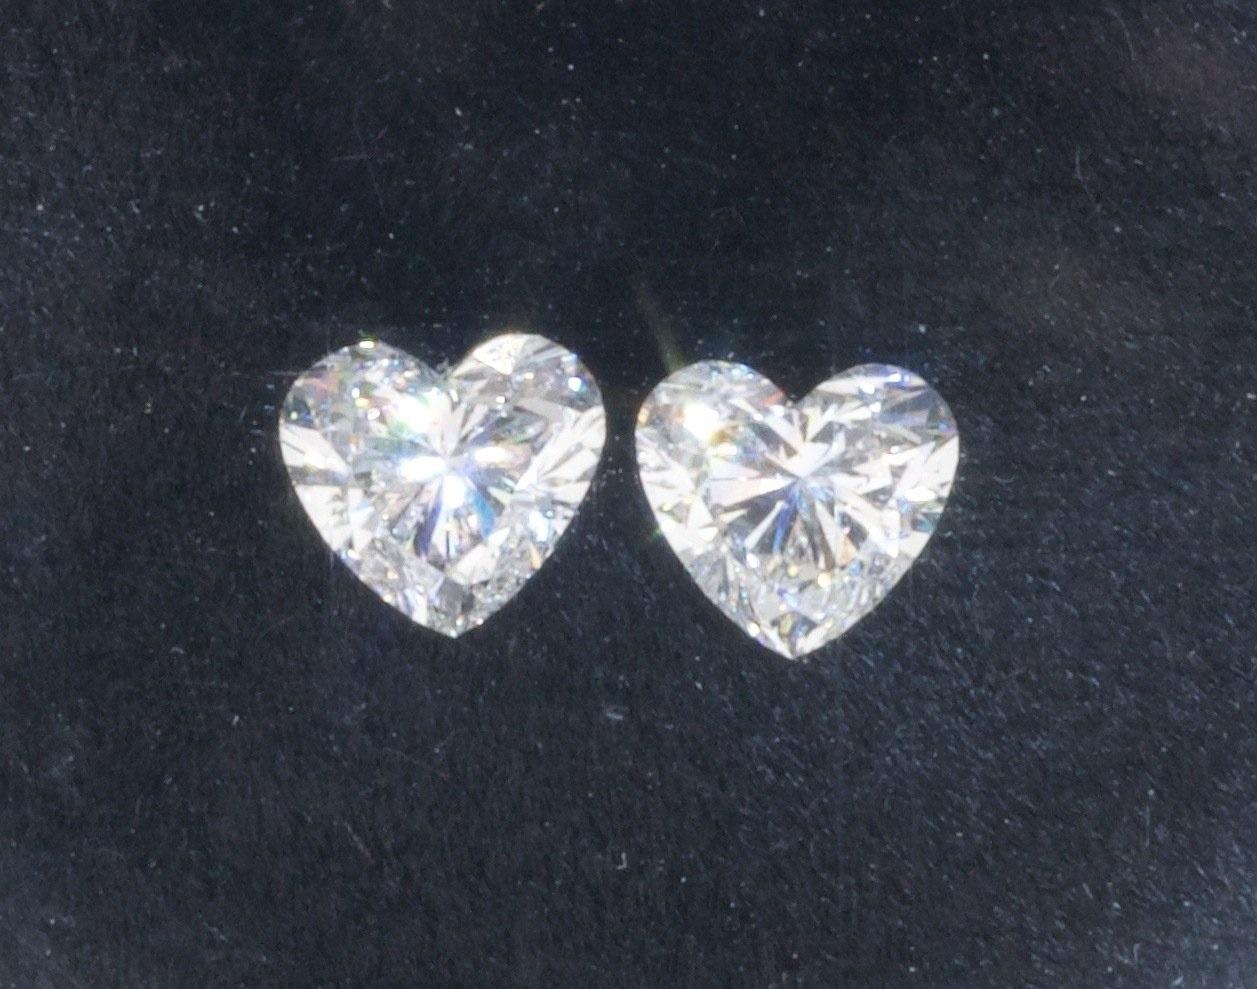 2 Pcs Natural Diamonds, 0.60 Ct, Heart, F, SI1, GIA Certificate 4